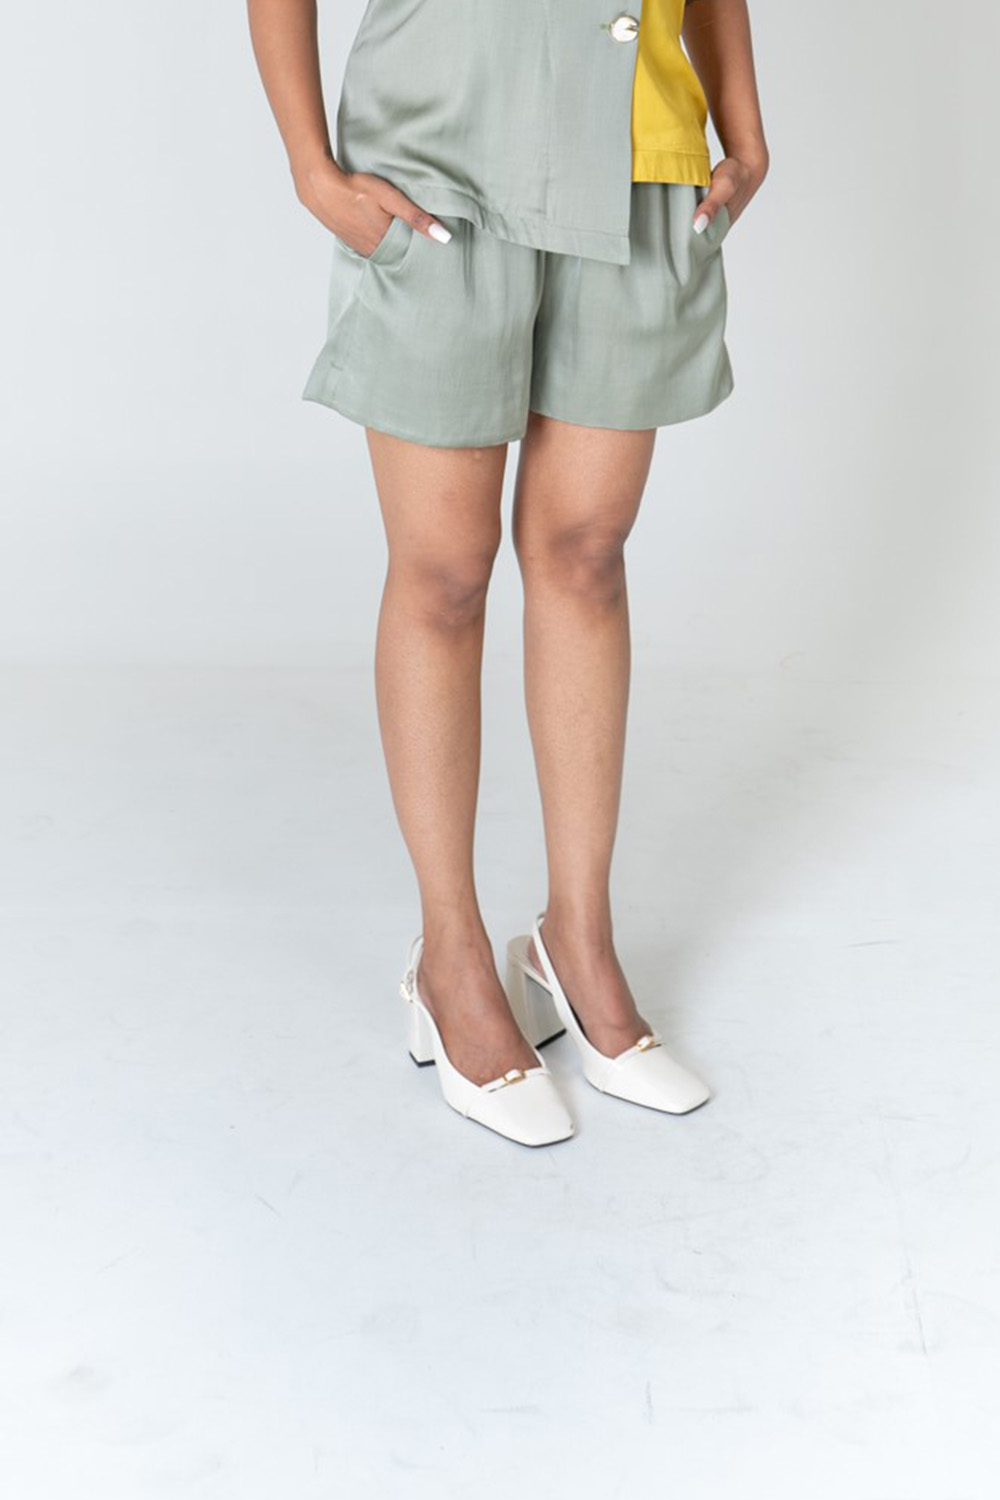 Green Shorts